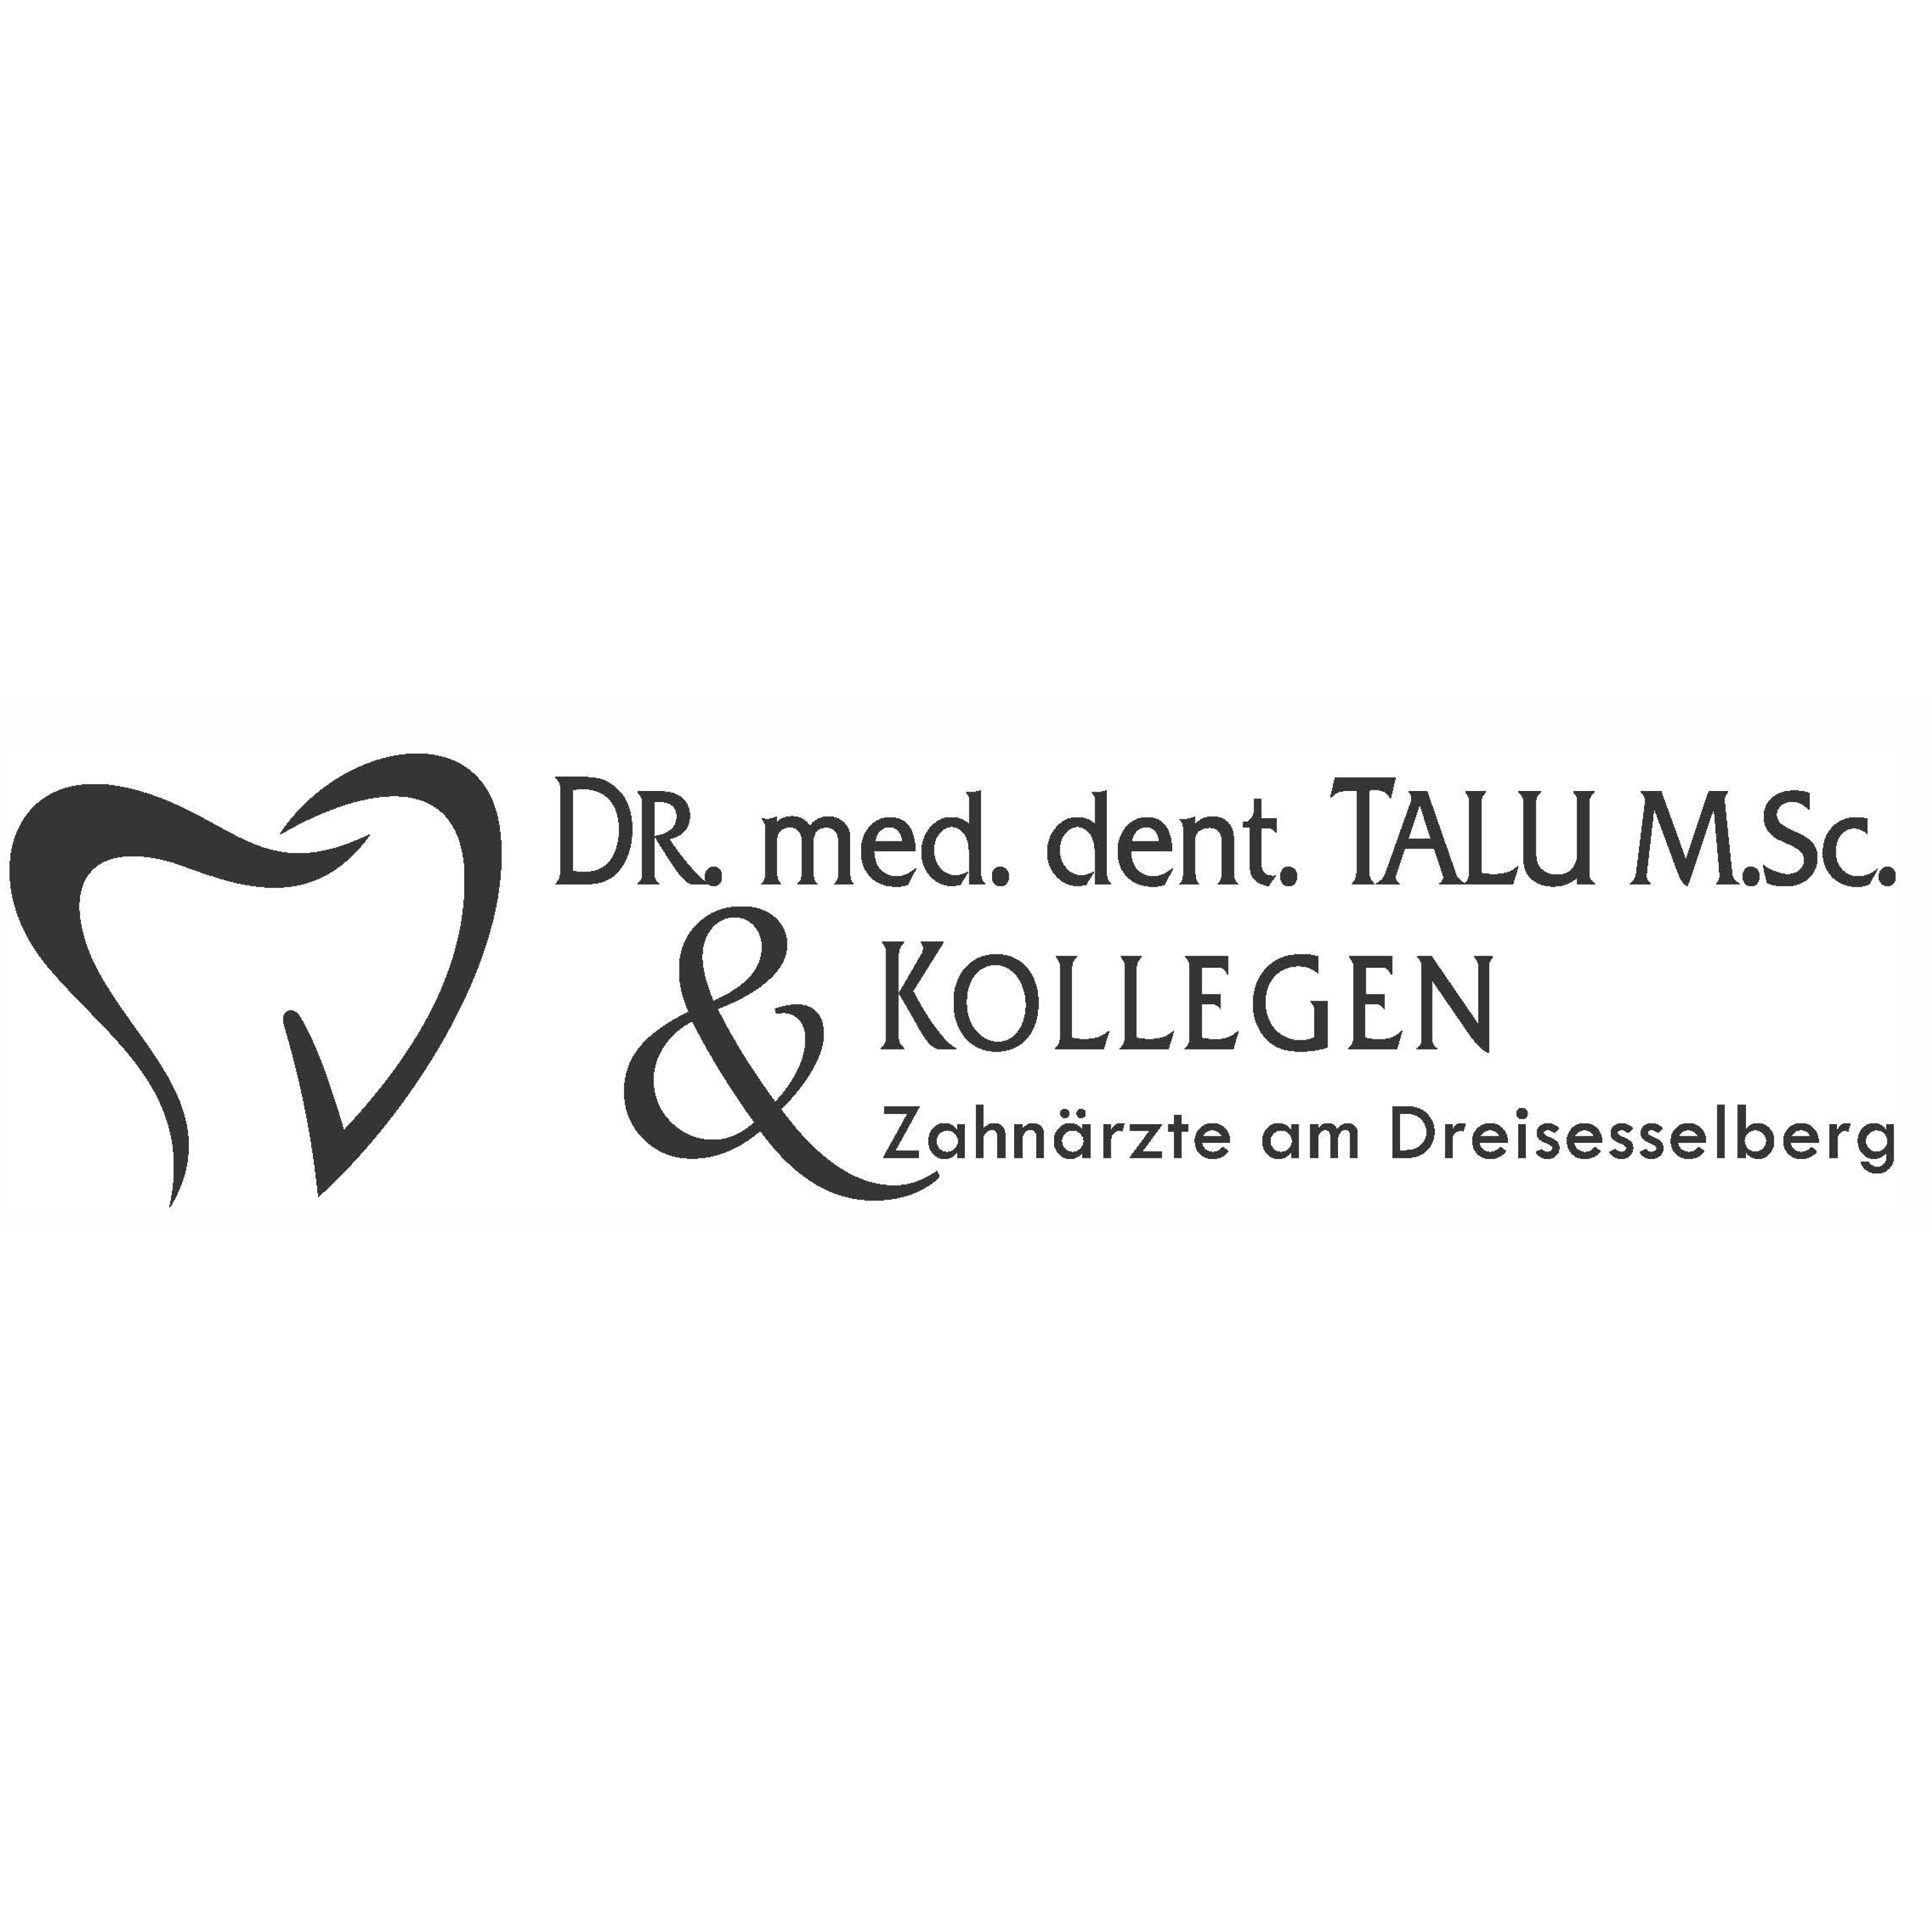 Dr. med. dent. Talu M.Sc. & Kollegen Zahnärzte am Dreisesselberg Logo